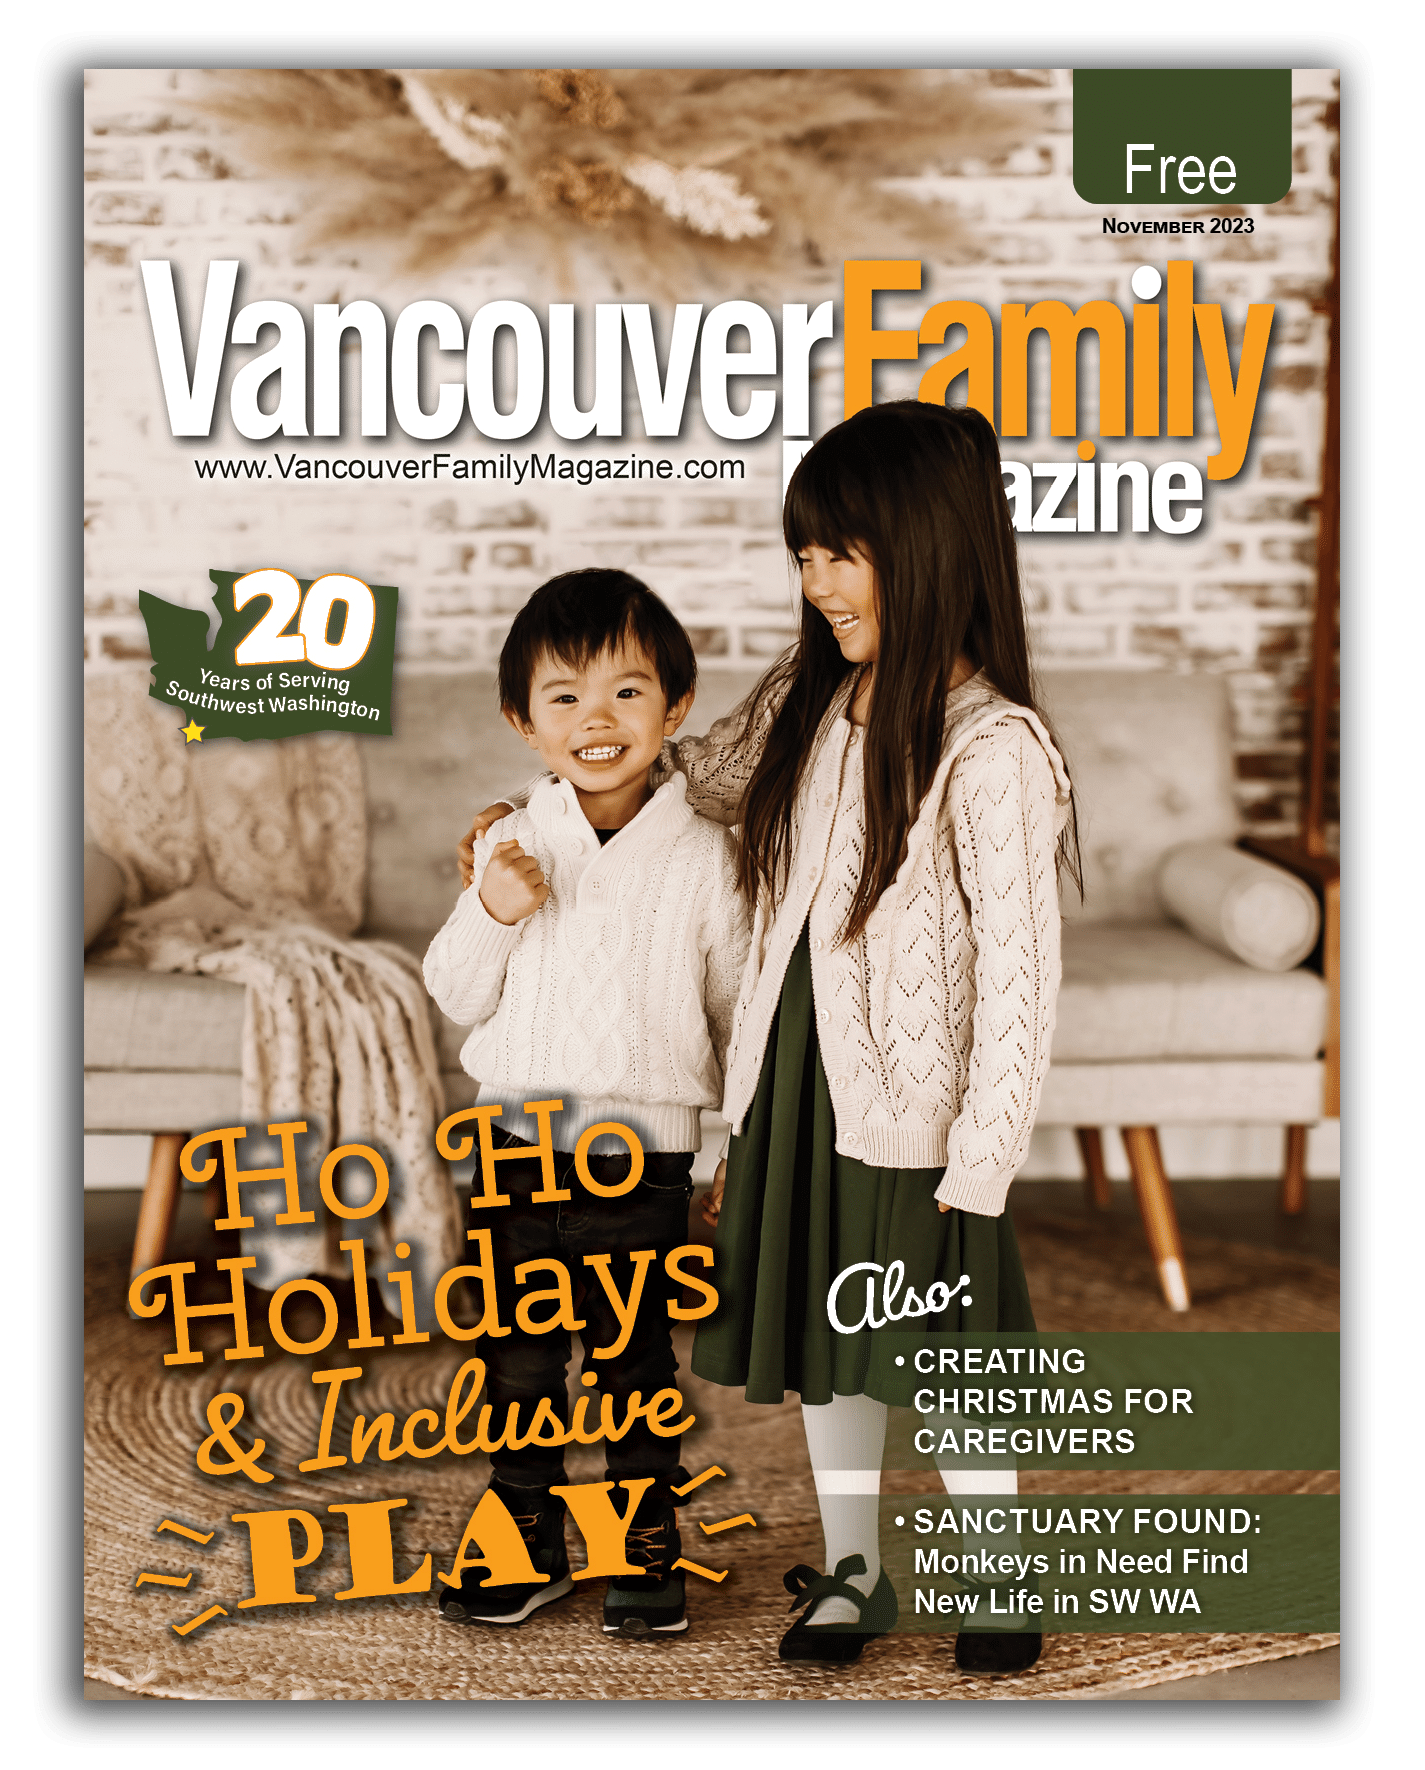 Vancouver Family Magazine November 2023 issue